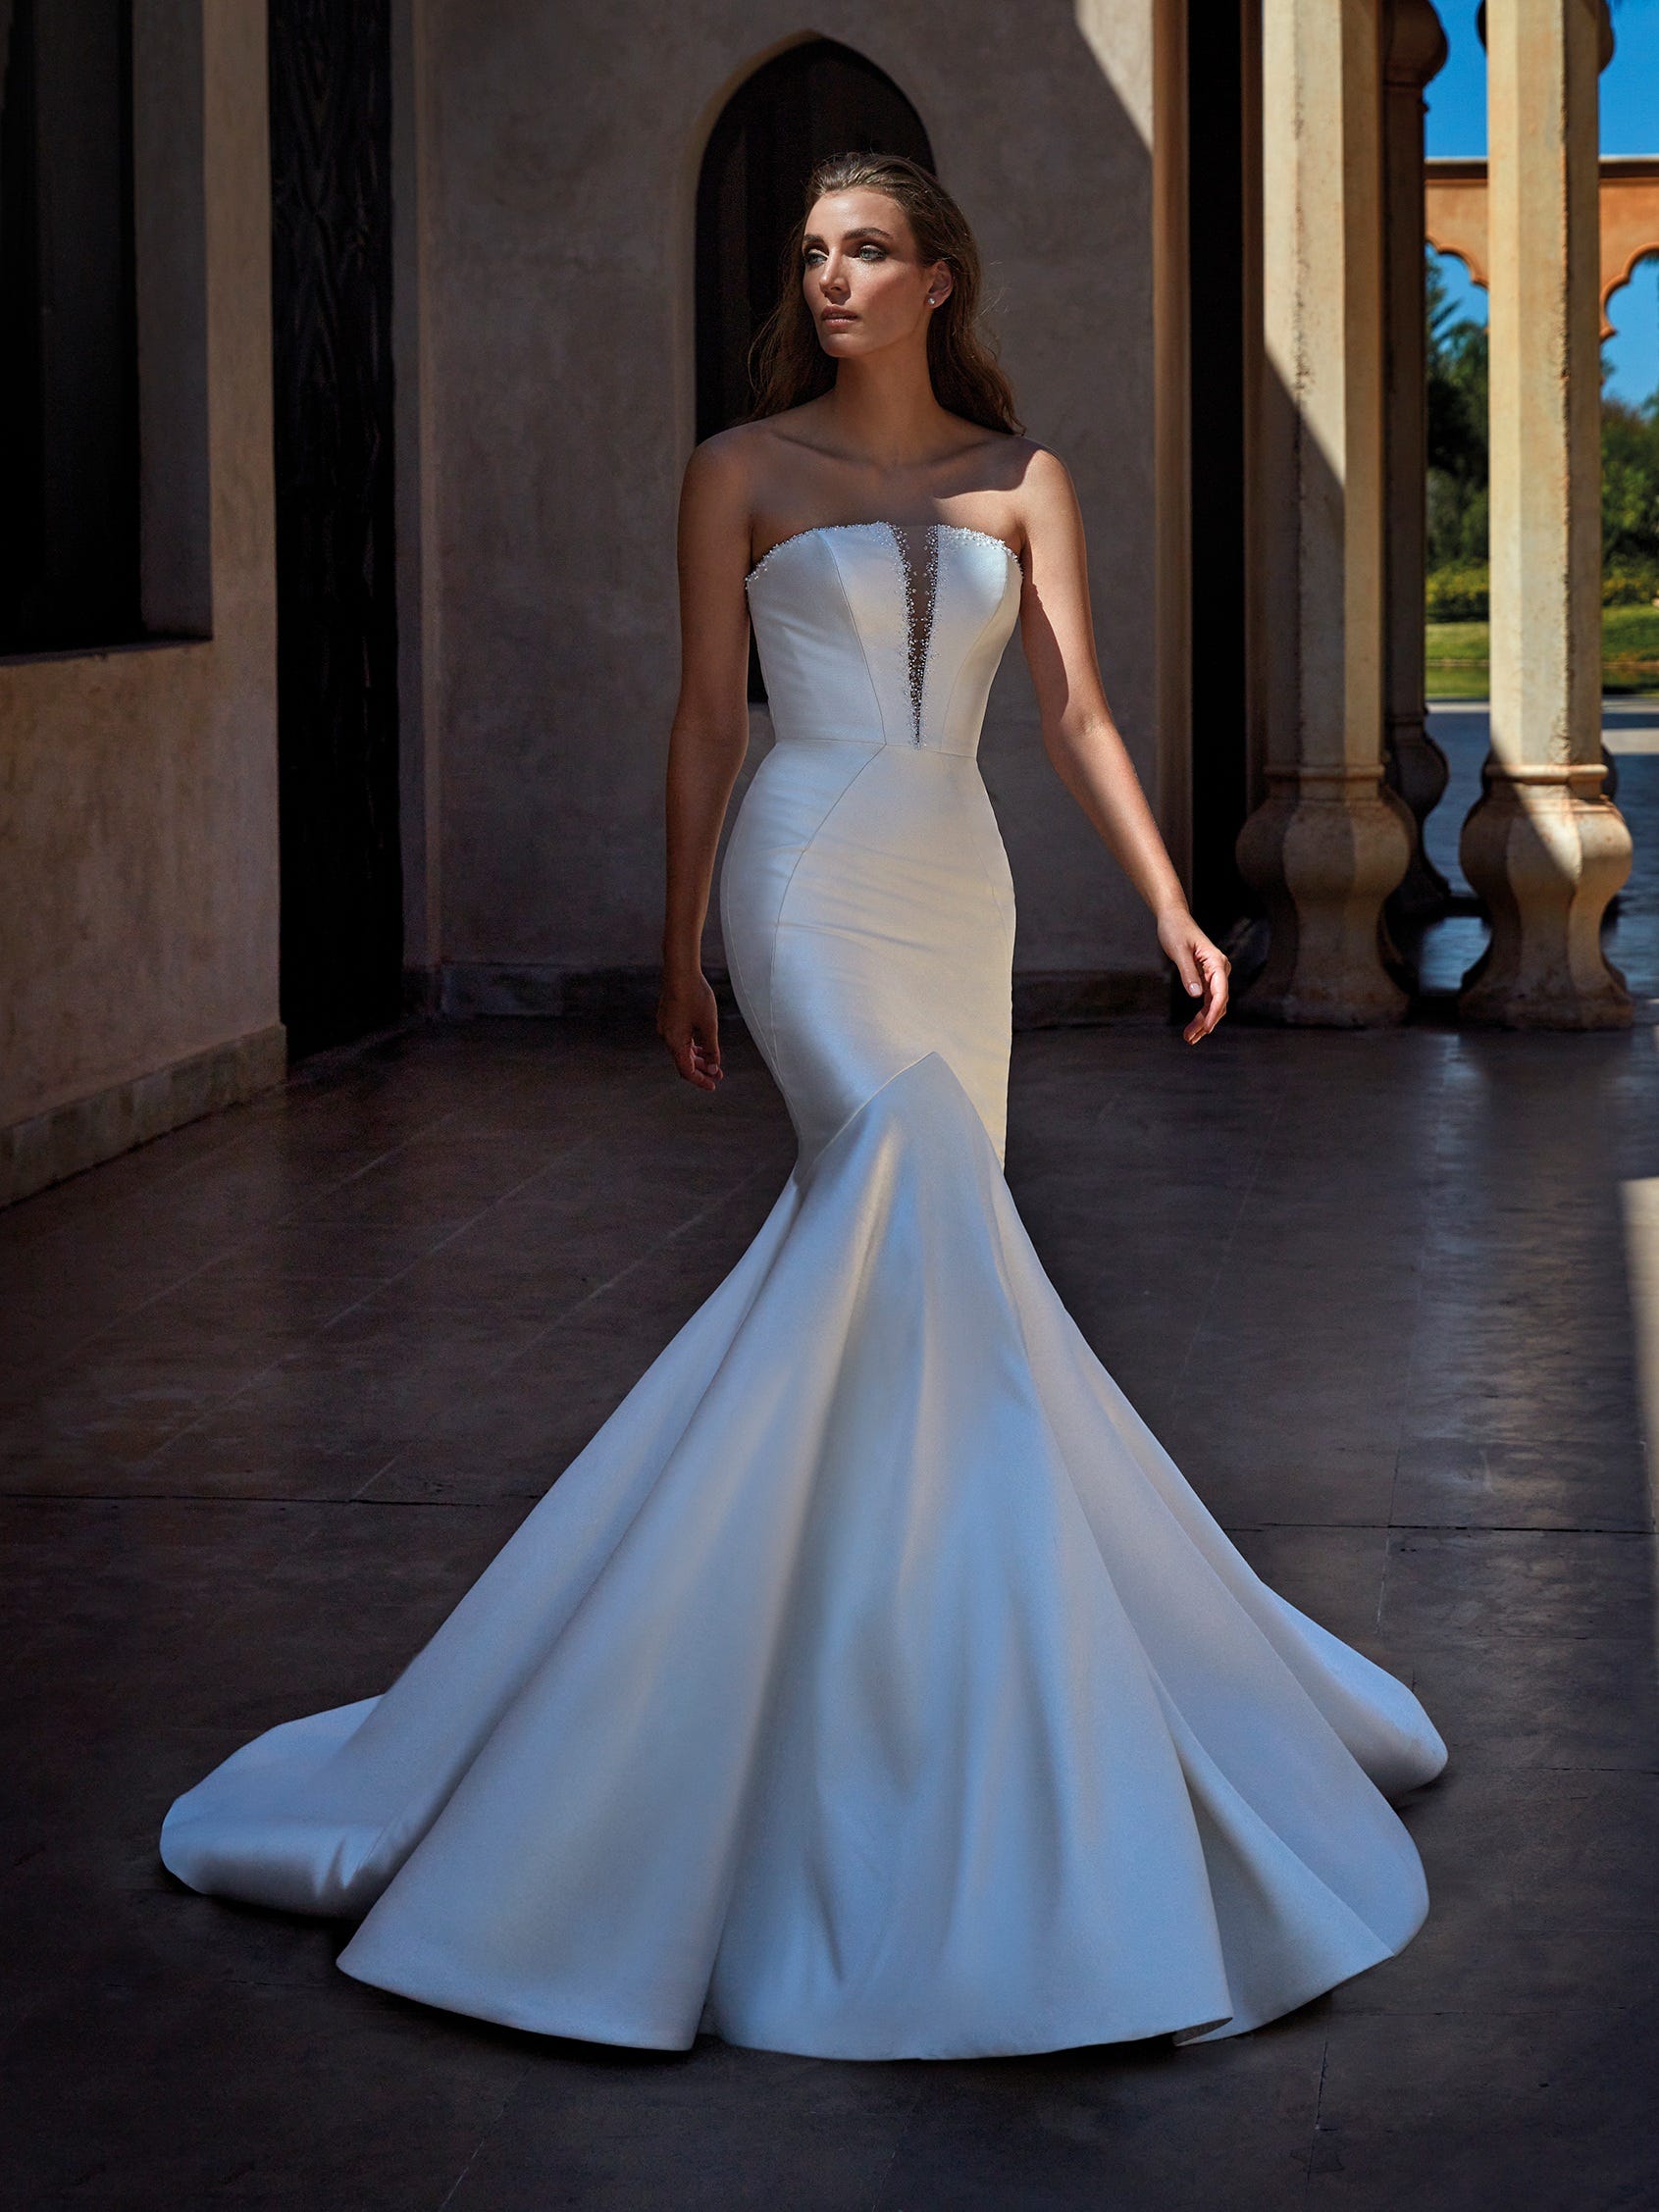 classy elegant wedding dresses